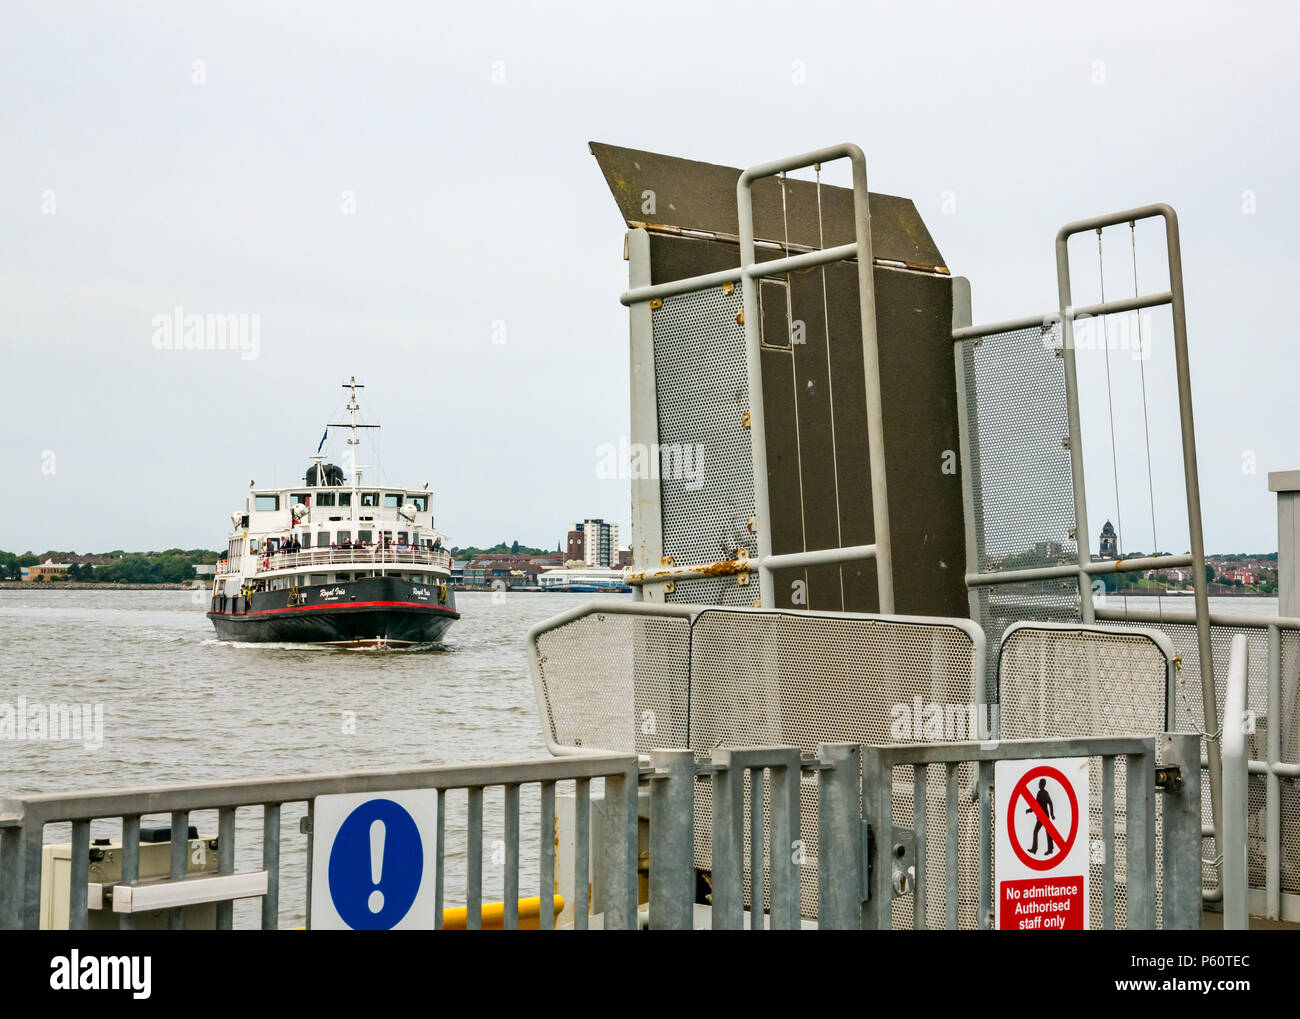 Mersey ferry, Royal iris, approaching dockside, Pier Head, Liverpool, England, UK Stock Photo